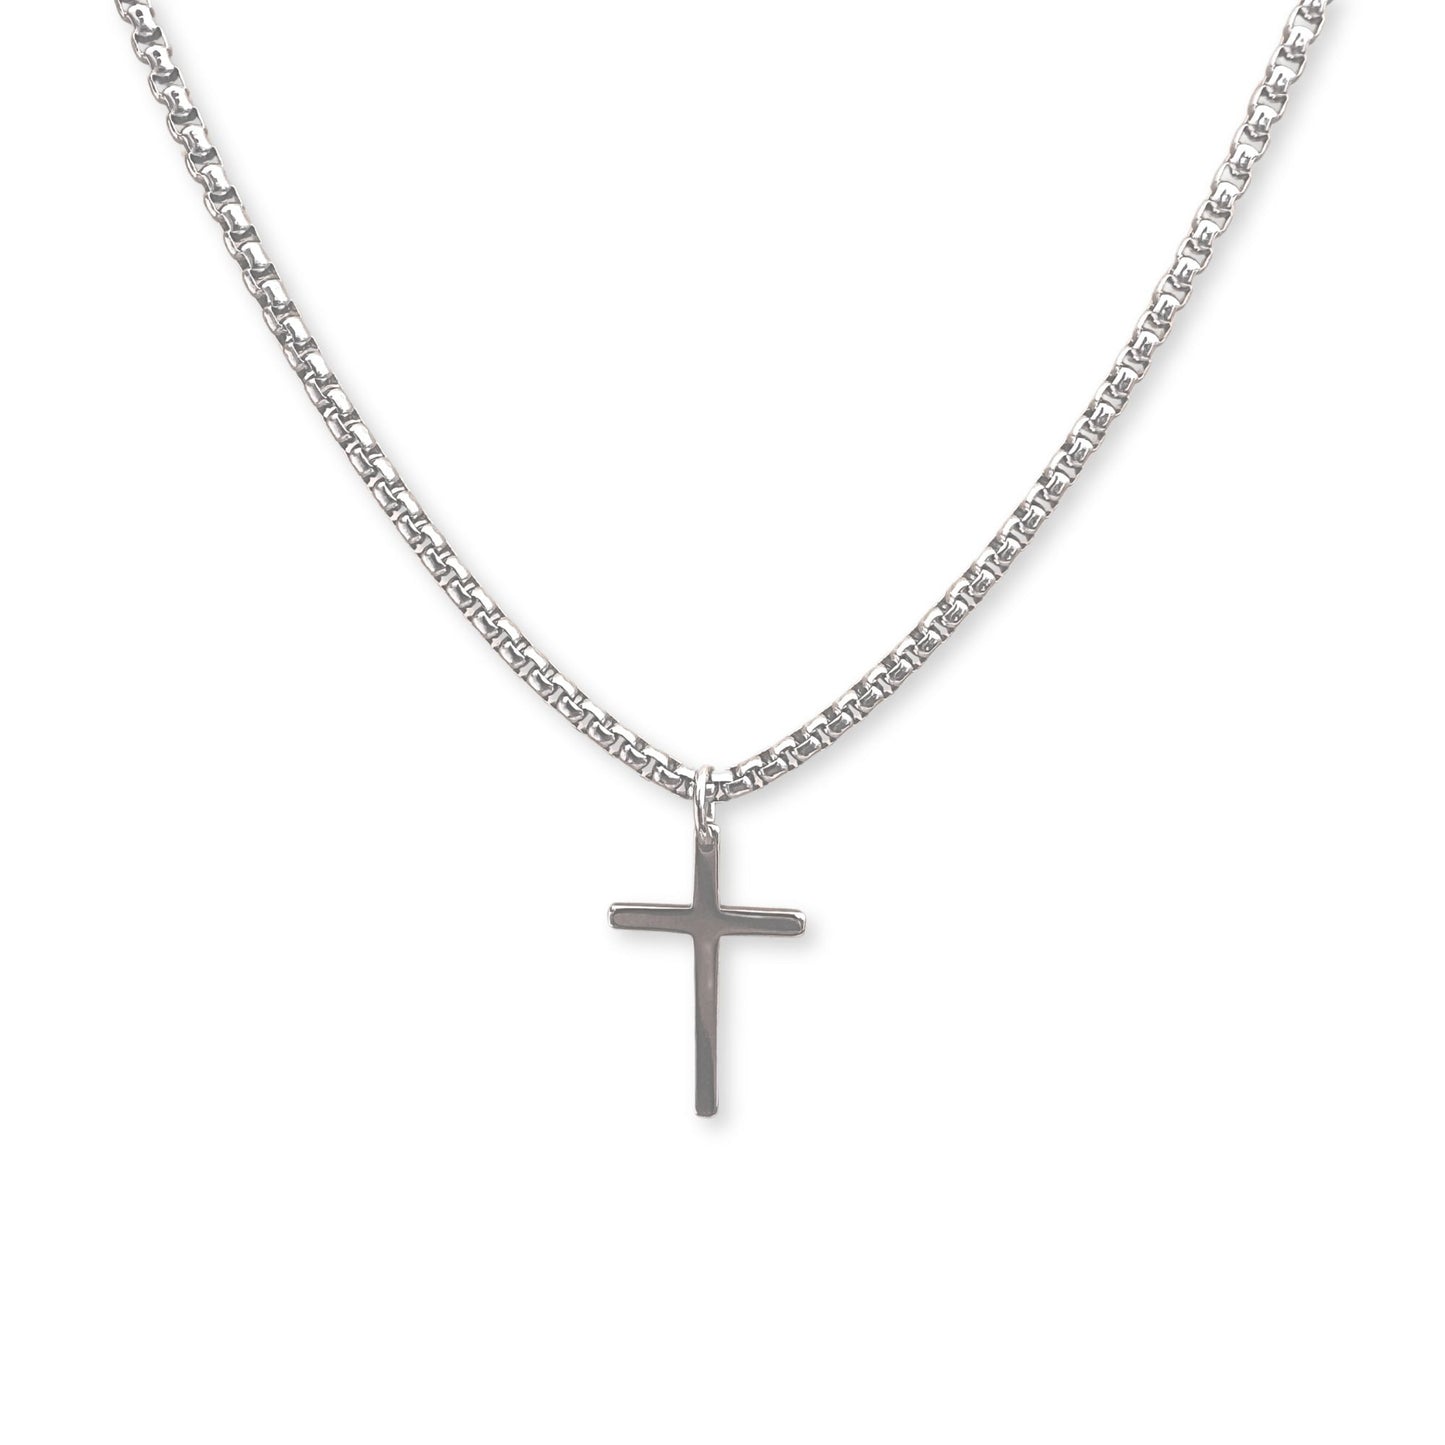 Silver cross pendant necklace